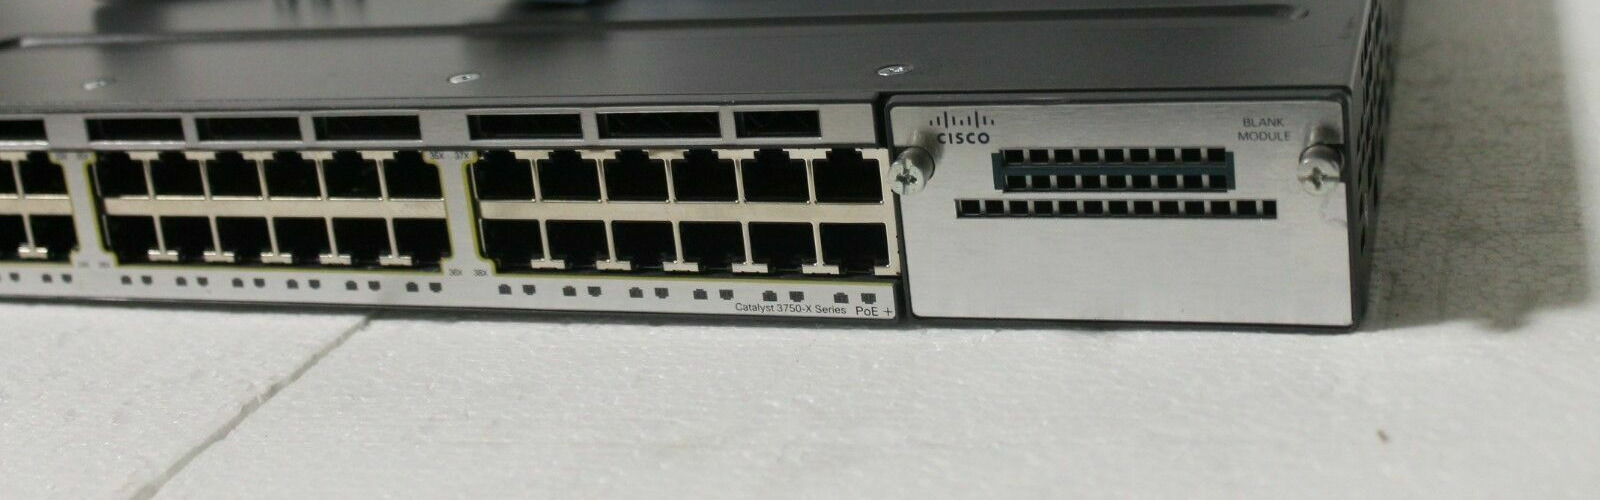 Cisco Catalyst WS-C3750X-48P-S  - Poe Gigabit Switch DUAL POWER